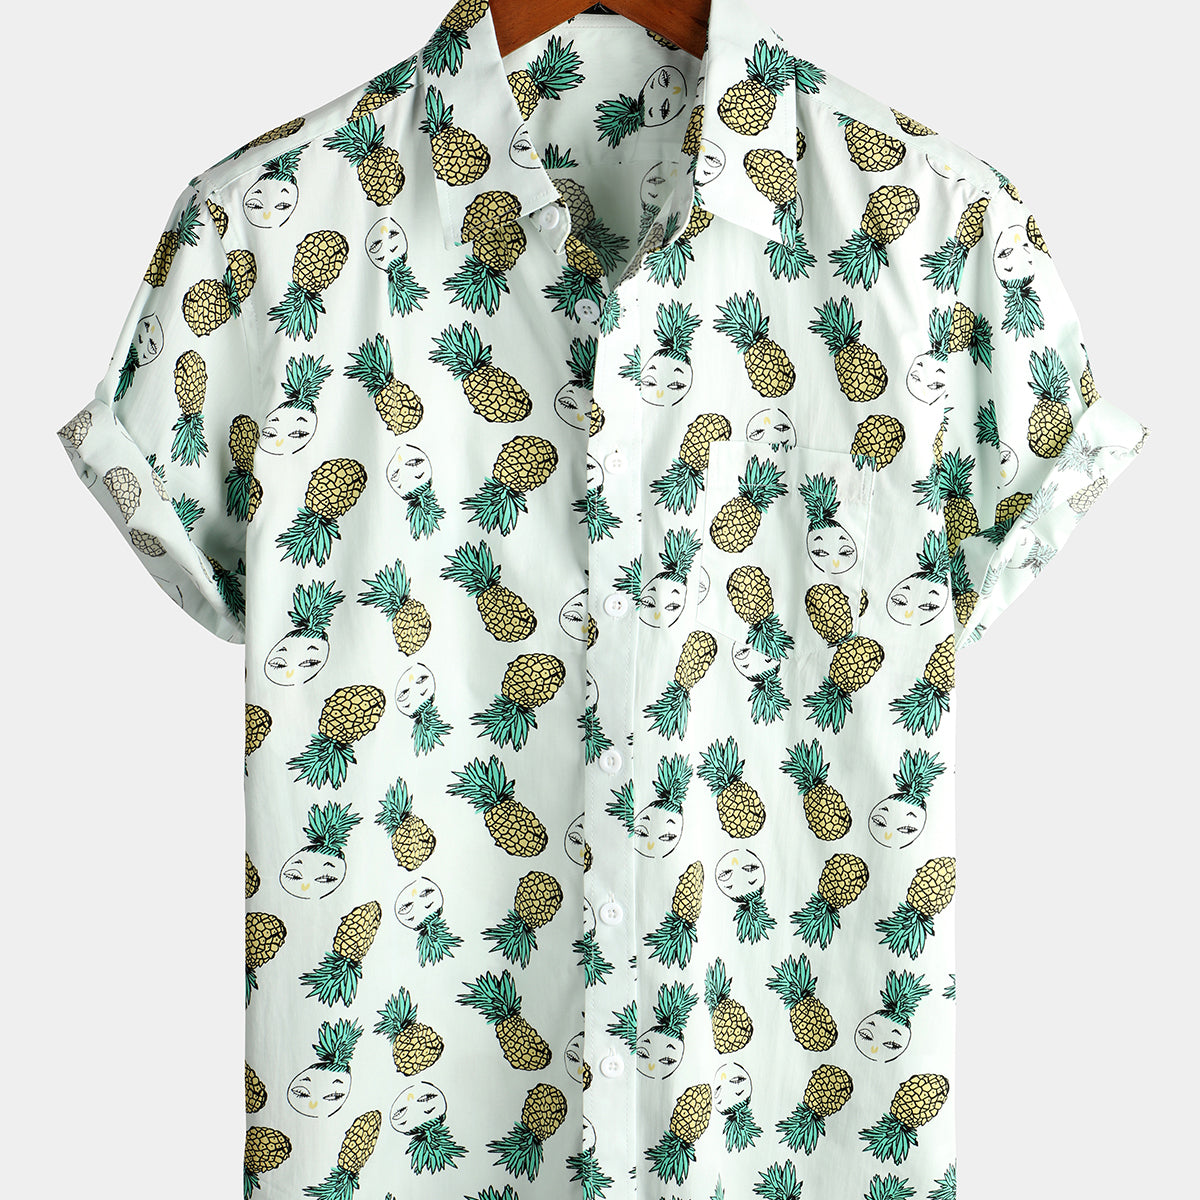 Men's Holiday Tropical Pineapple Cotton Pocket Short Sleeve Shirt